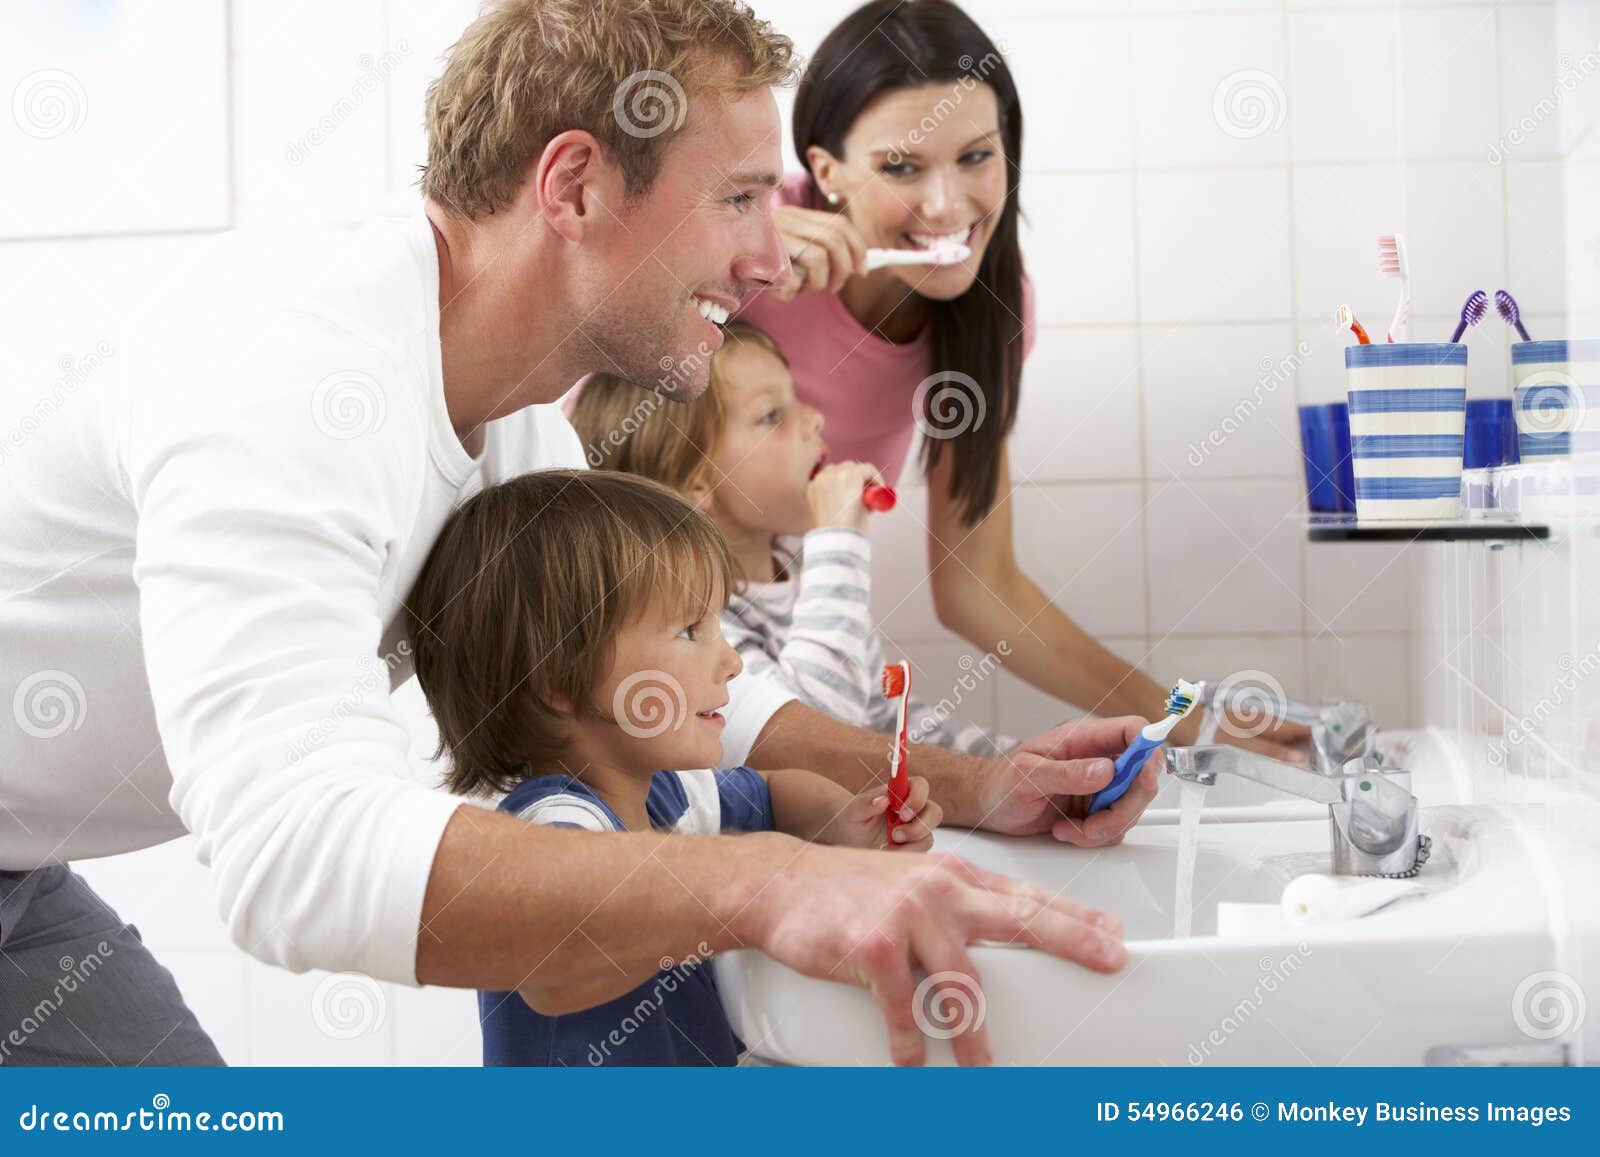 family in bathroom brushing teeth